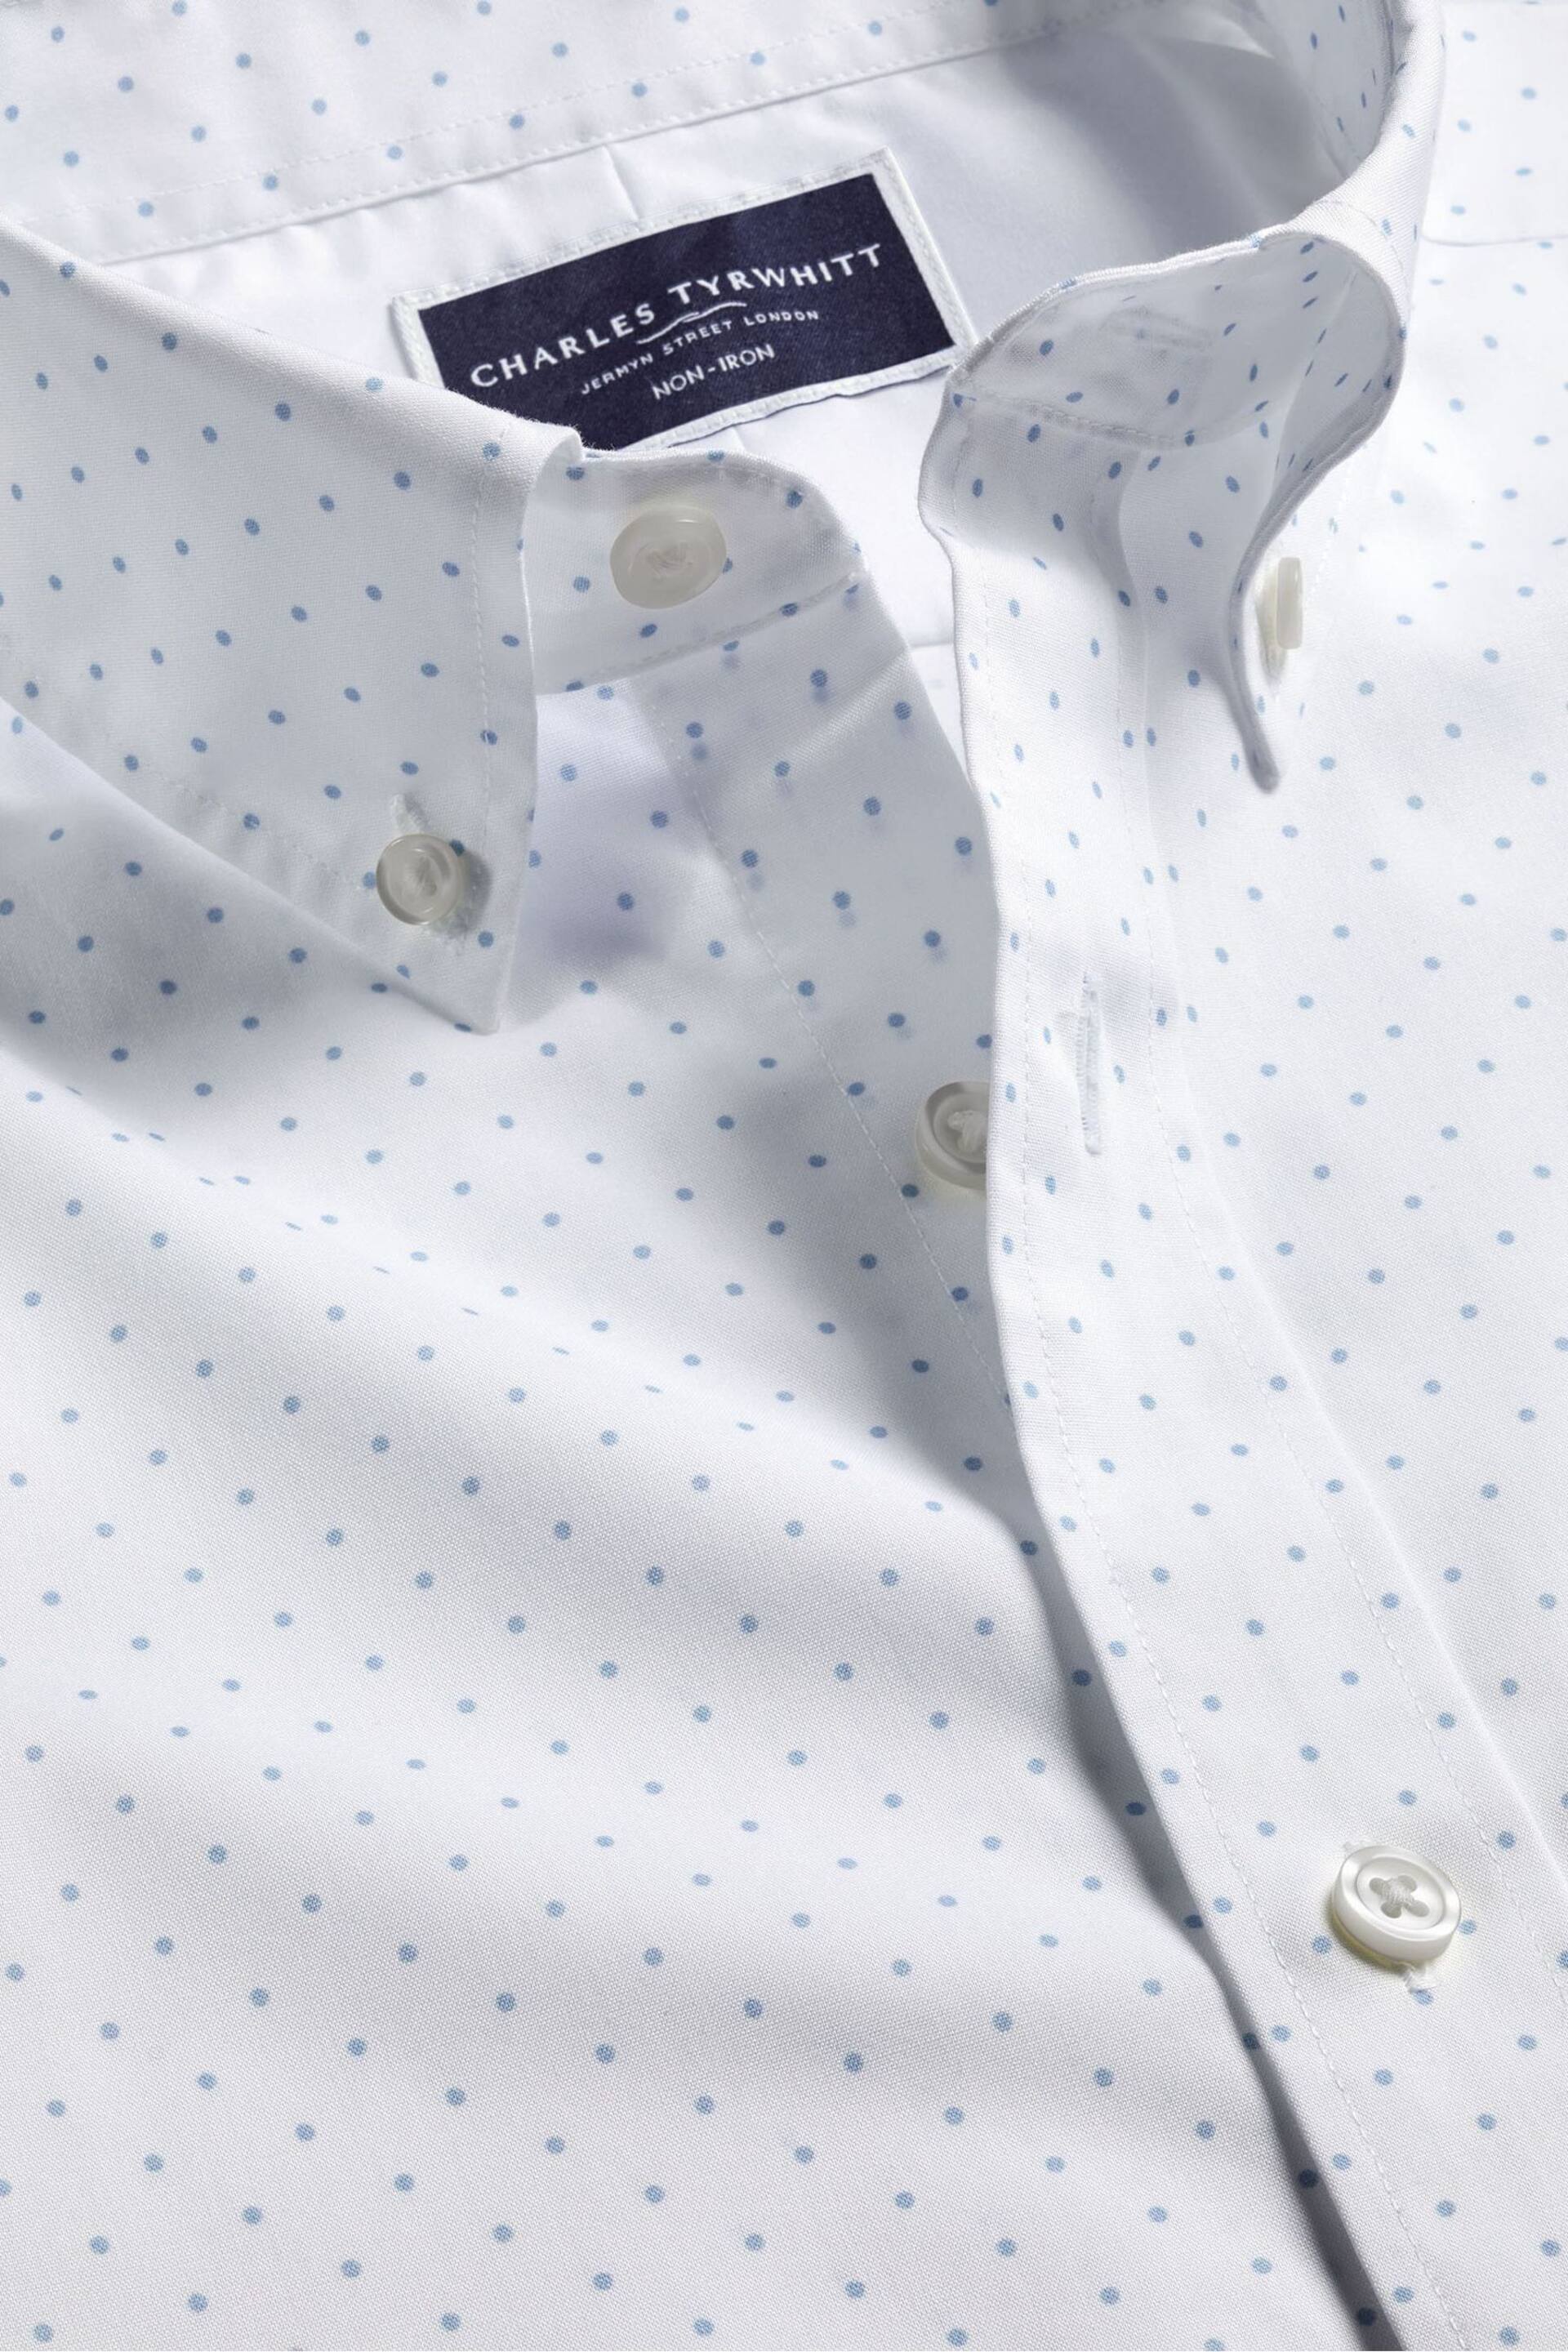 Charles Tyrwhitt White Slim Fit Spot Non-Iron Print Shirt - Image 4 of 5